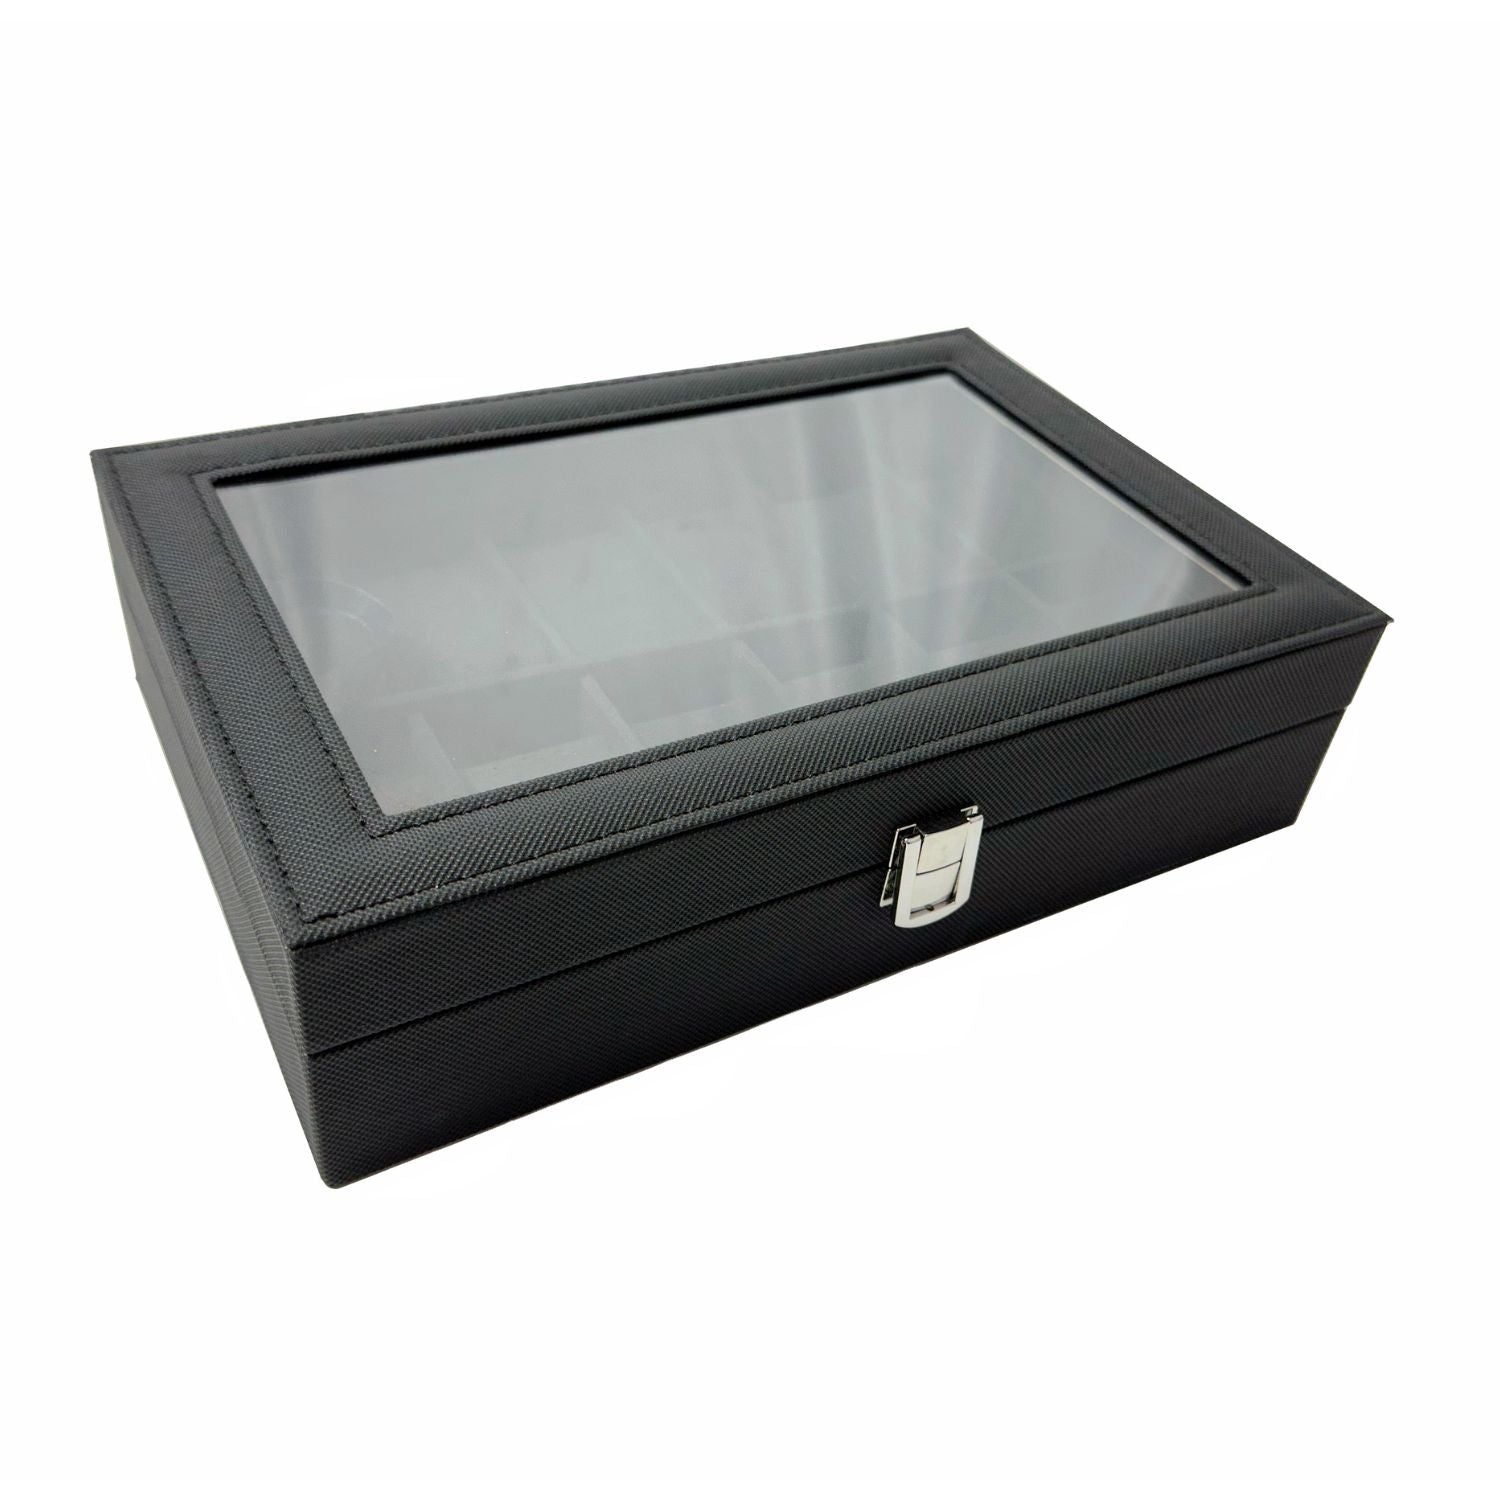 GOMINIMO 12 Slot Watch Box with Transparent Display Window (Black)